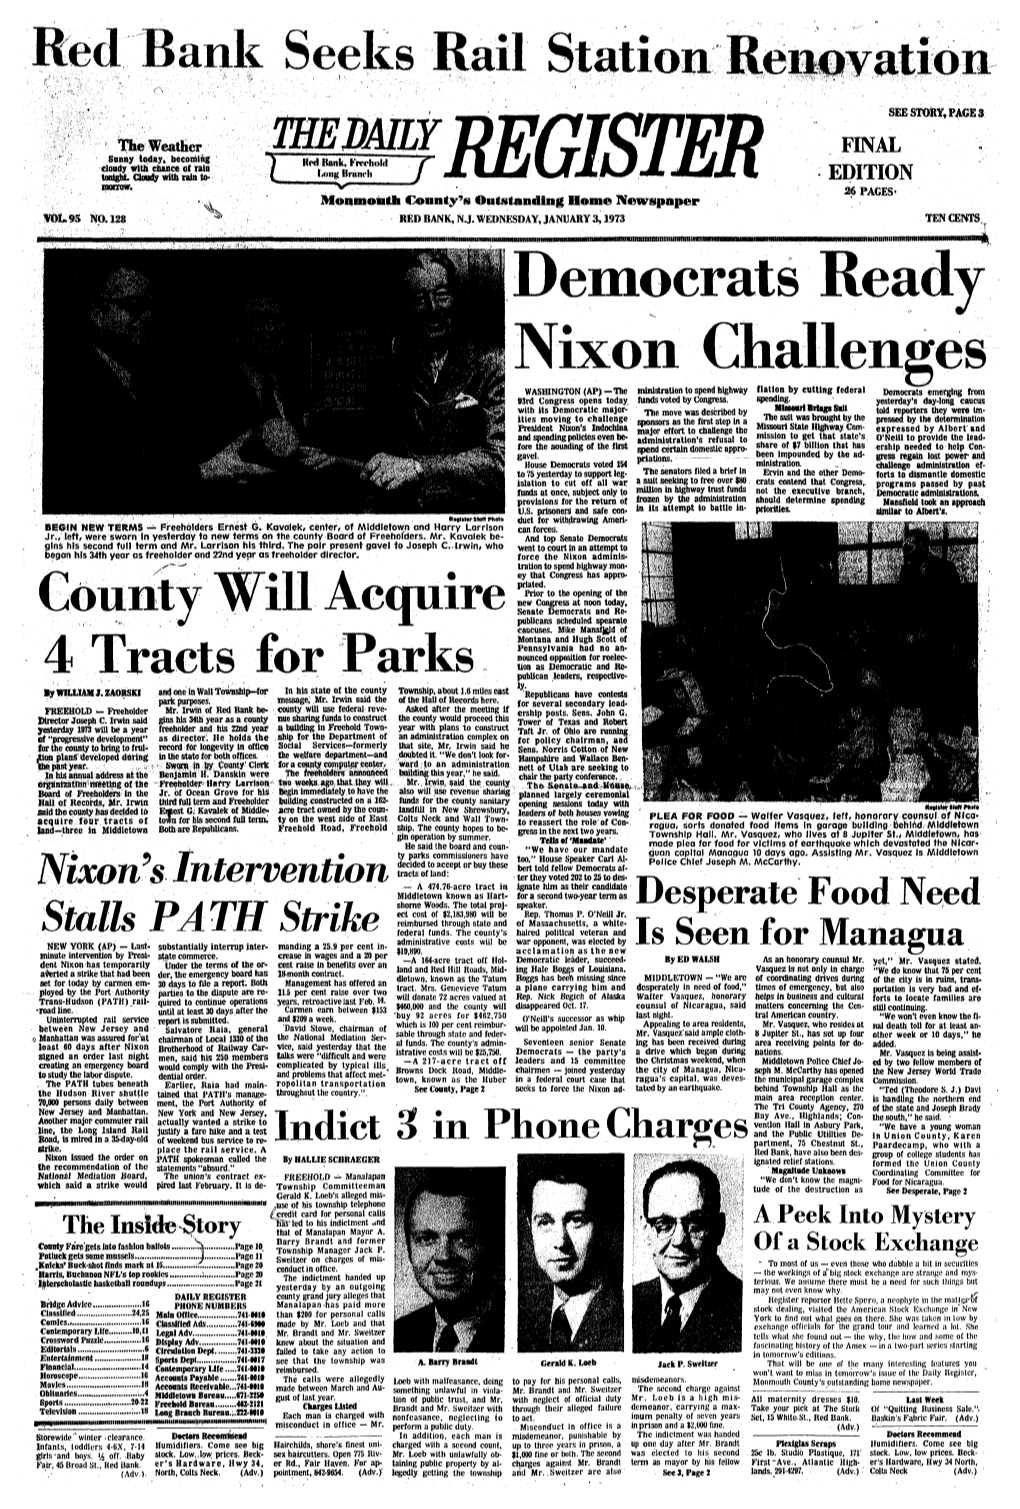 Democrats Ready Nixon Challenges